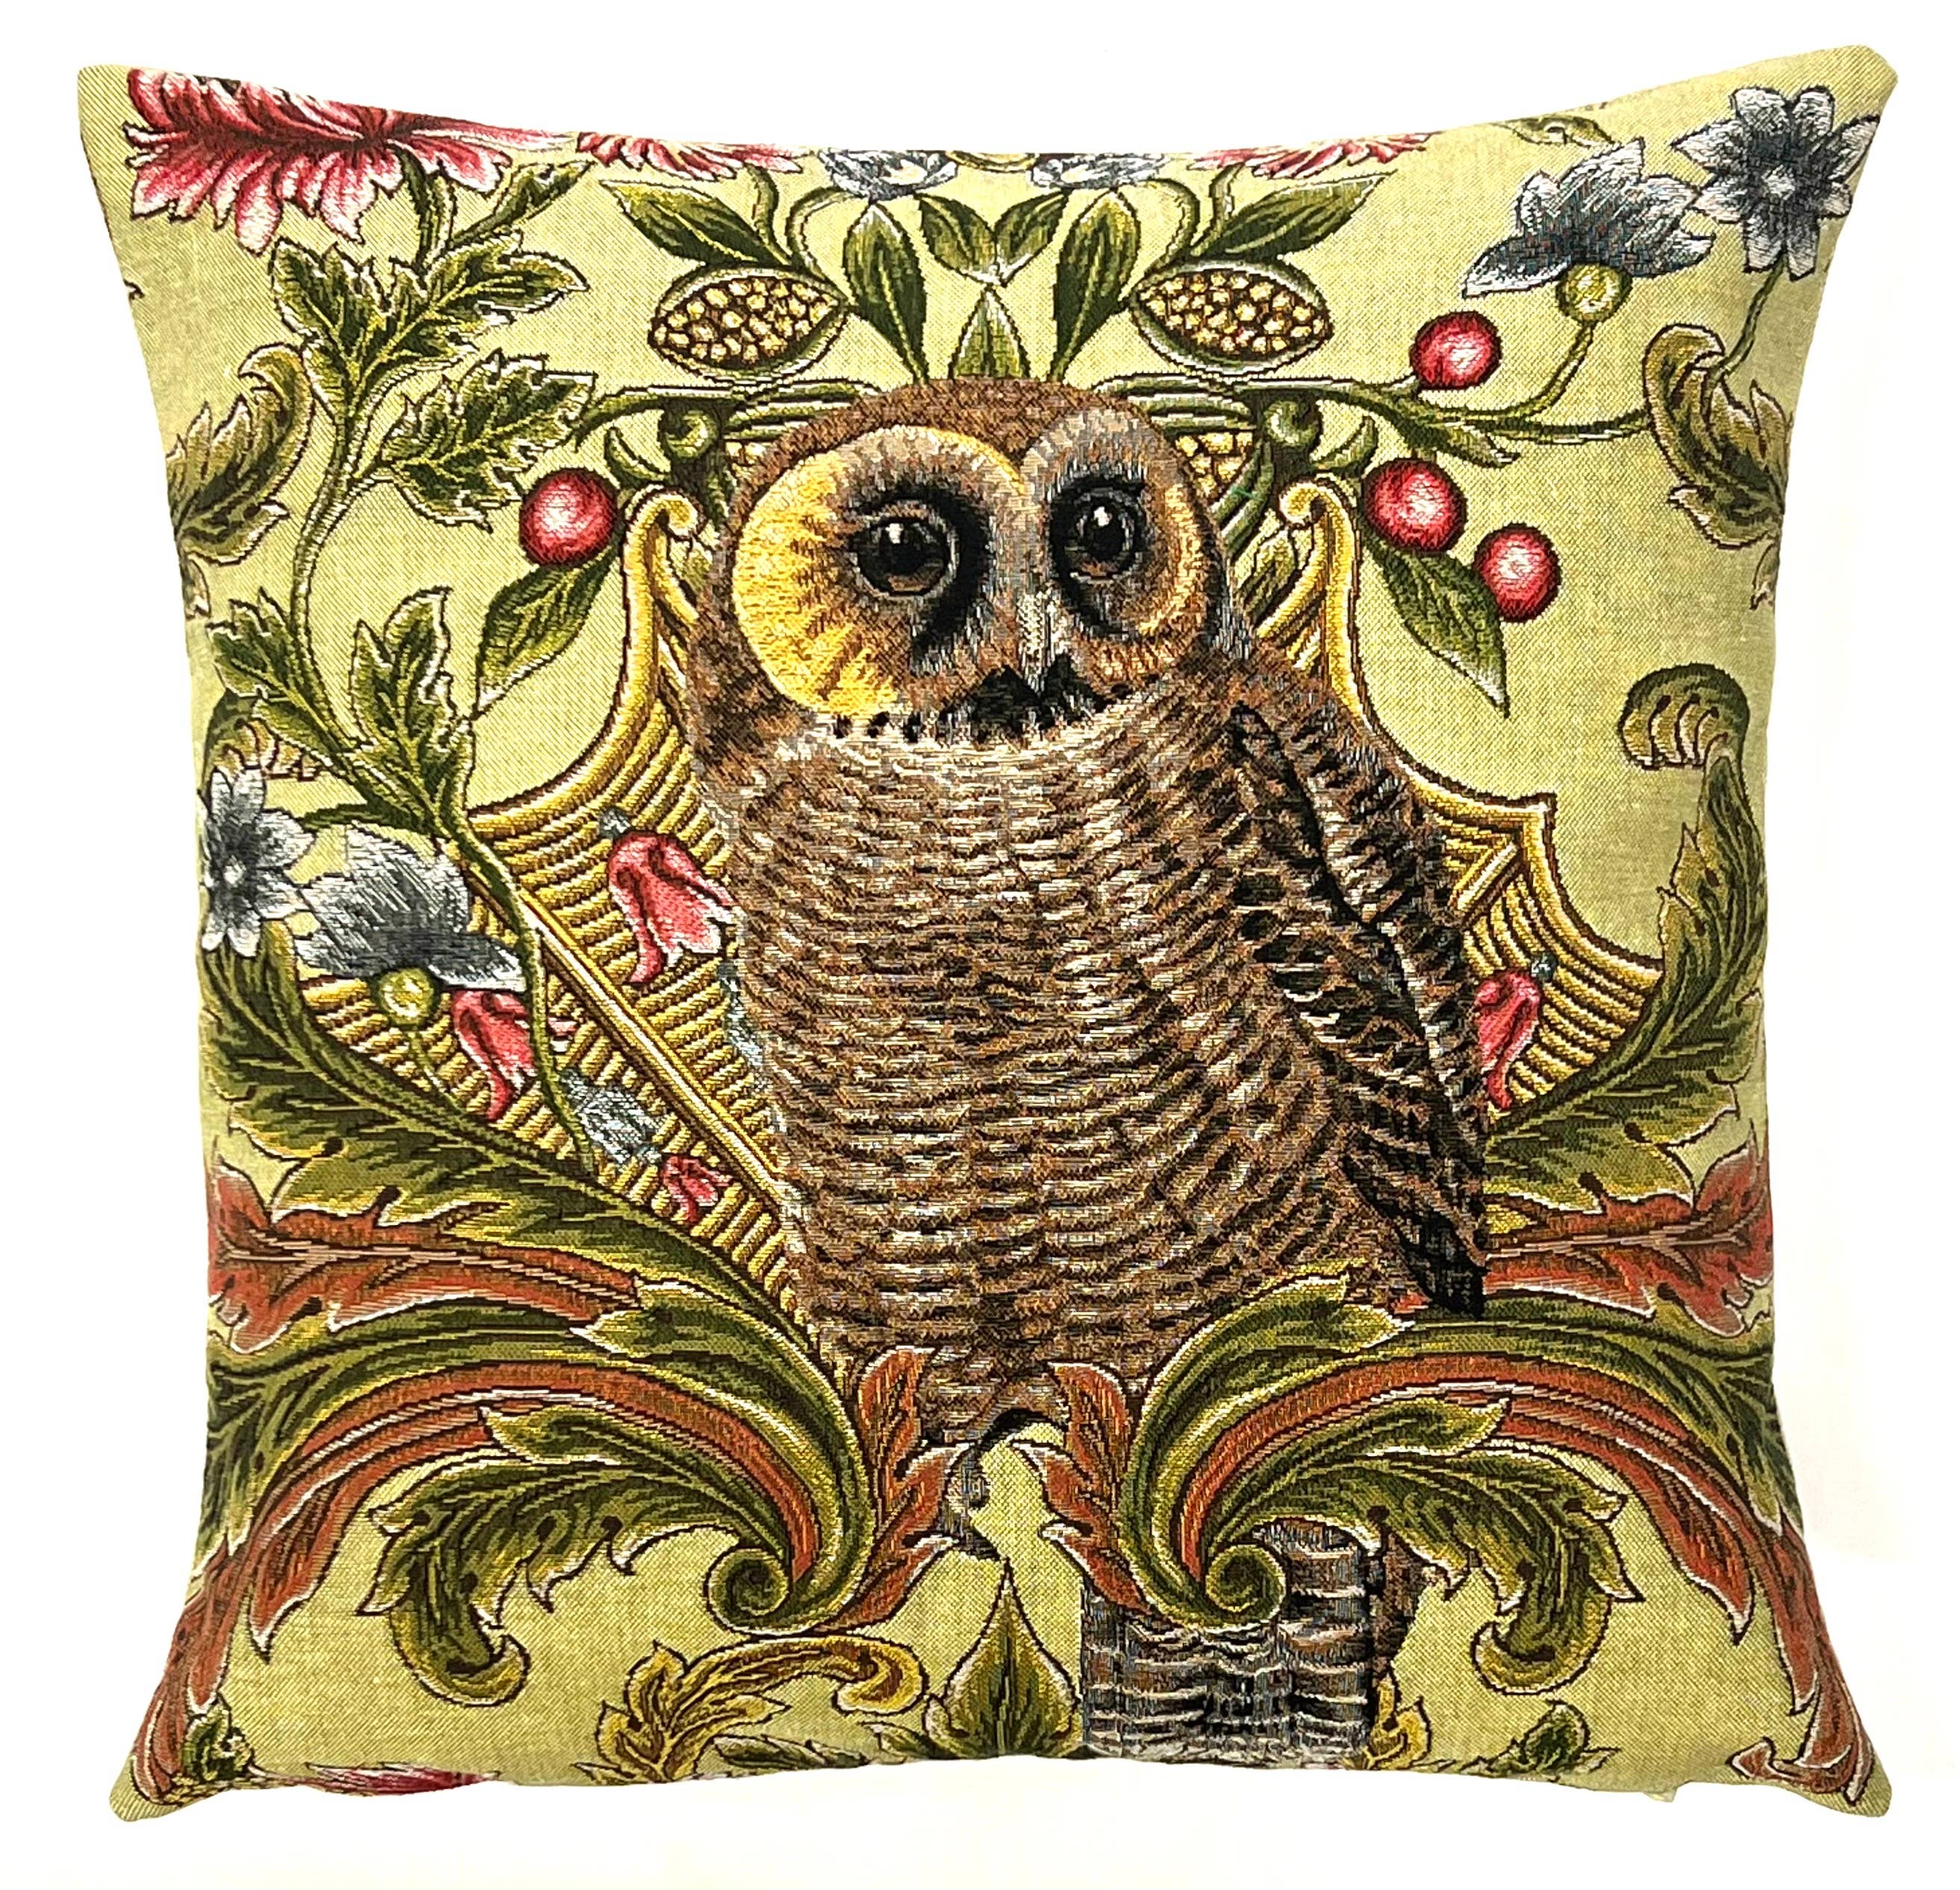 Woven Owl Pillow